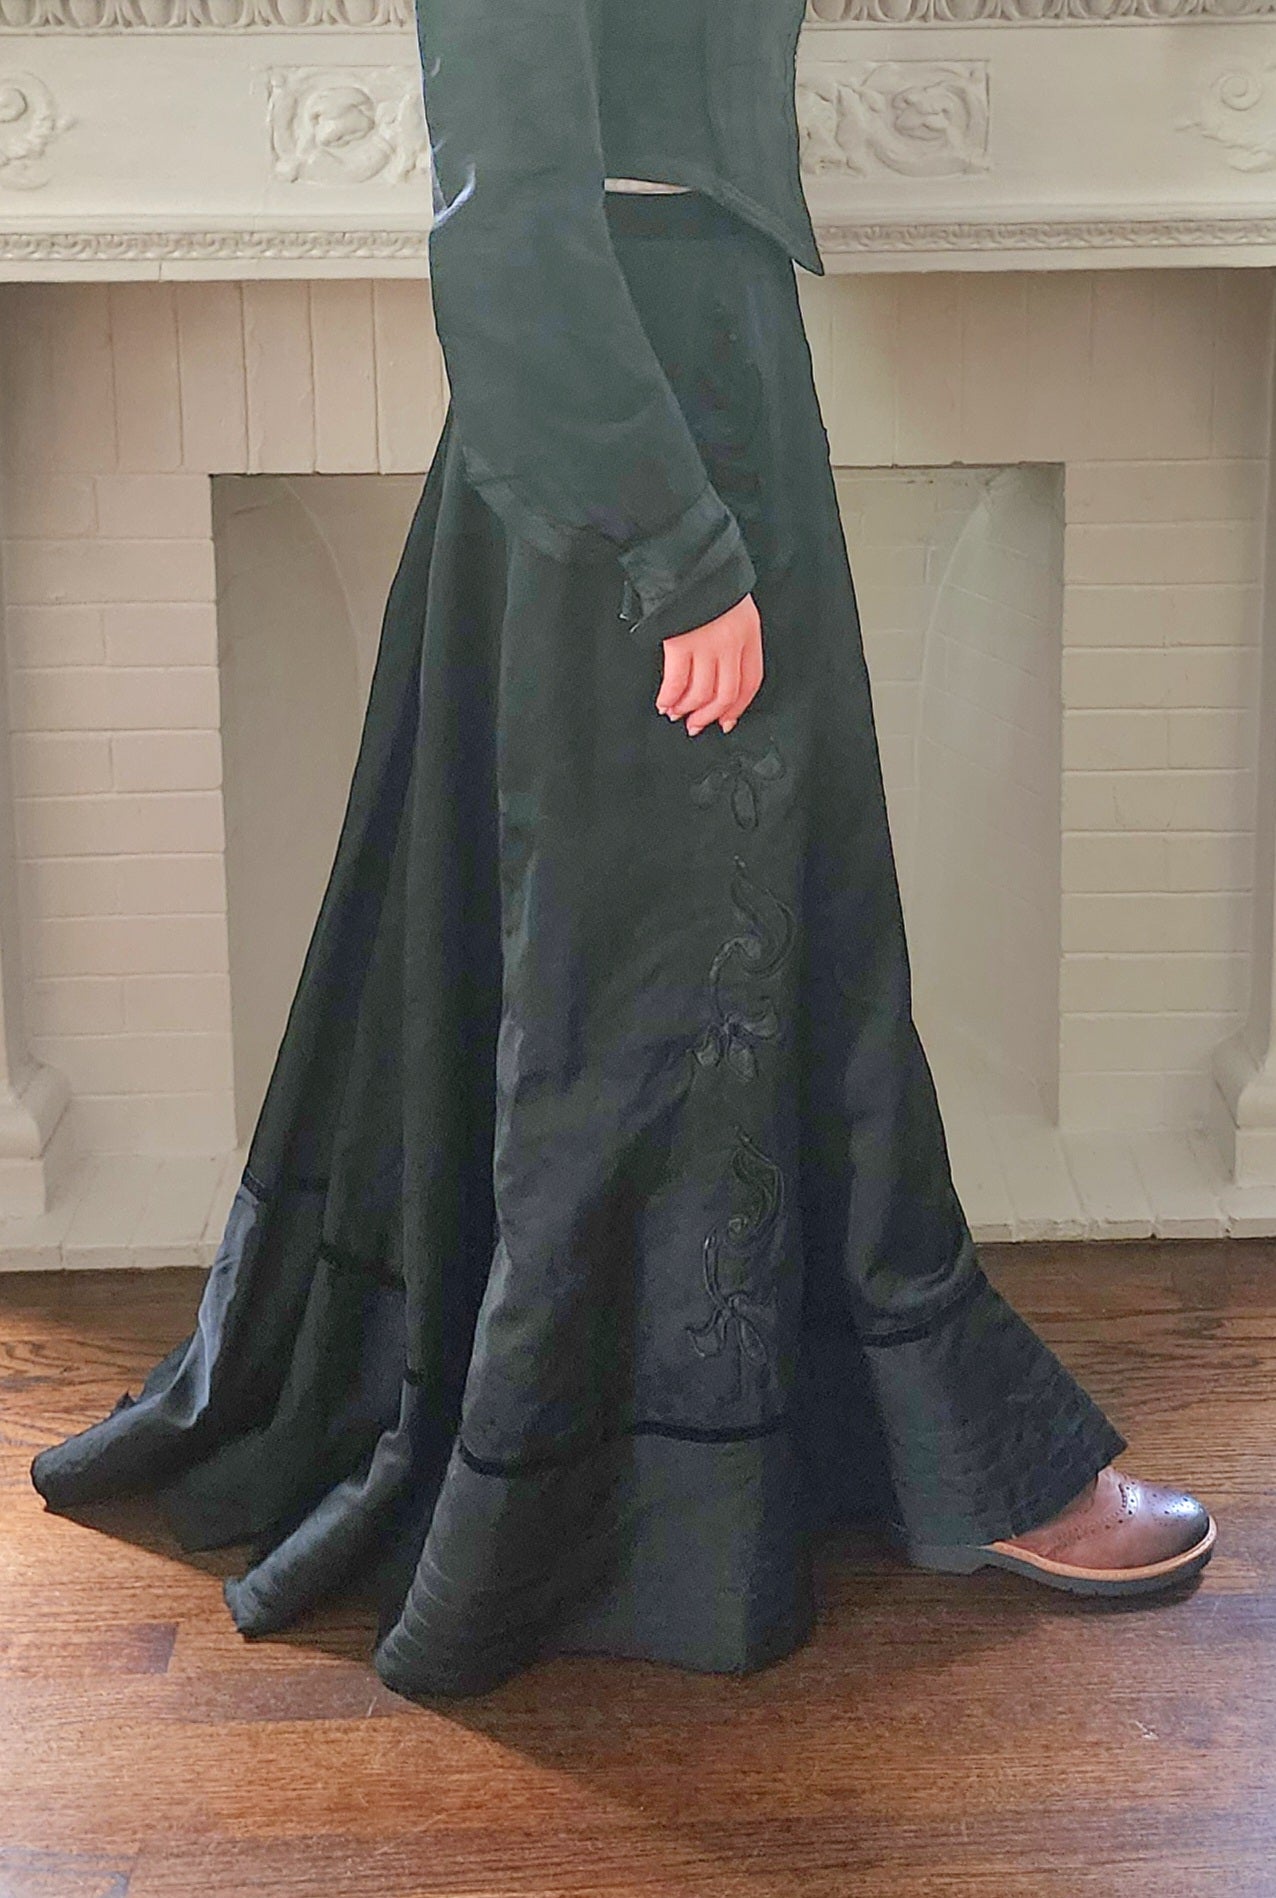 1910s Black Satin Long Skirt Leaf Applique Edwardian Costume AS IS